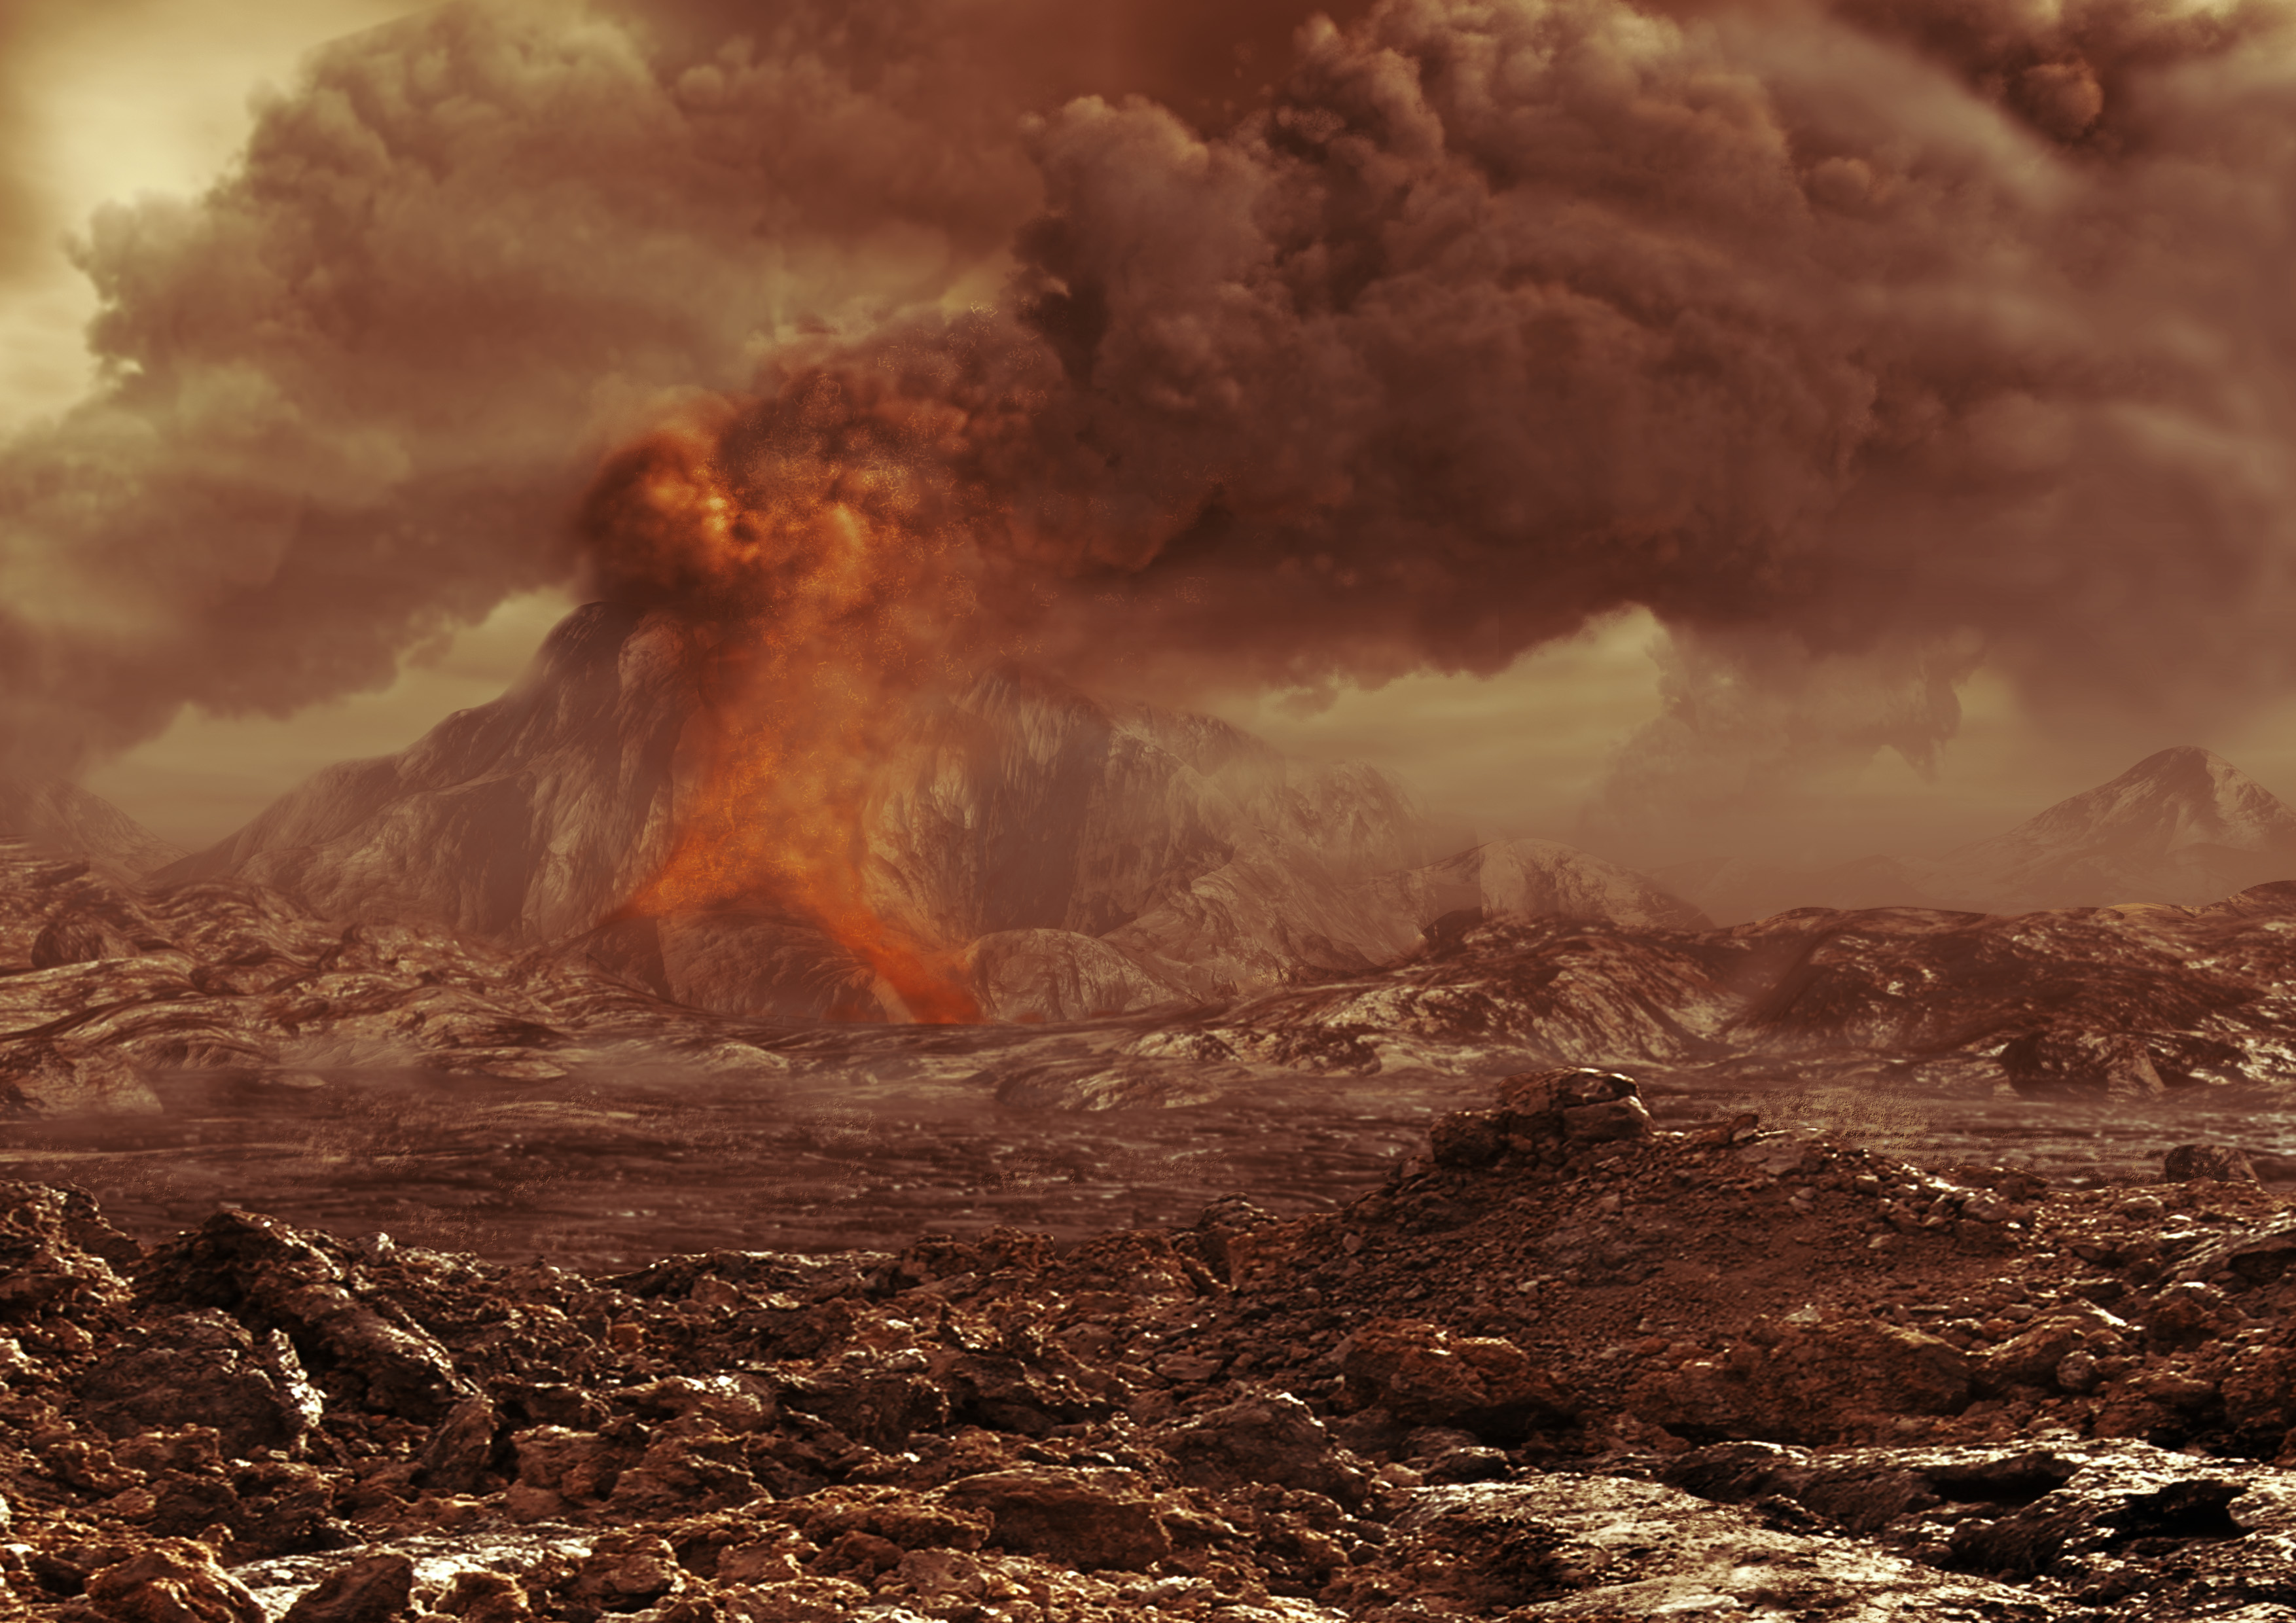 Volcanic activity on Venus